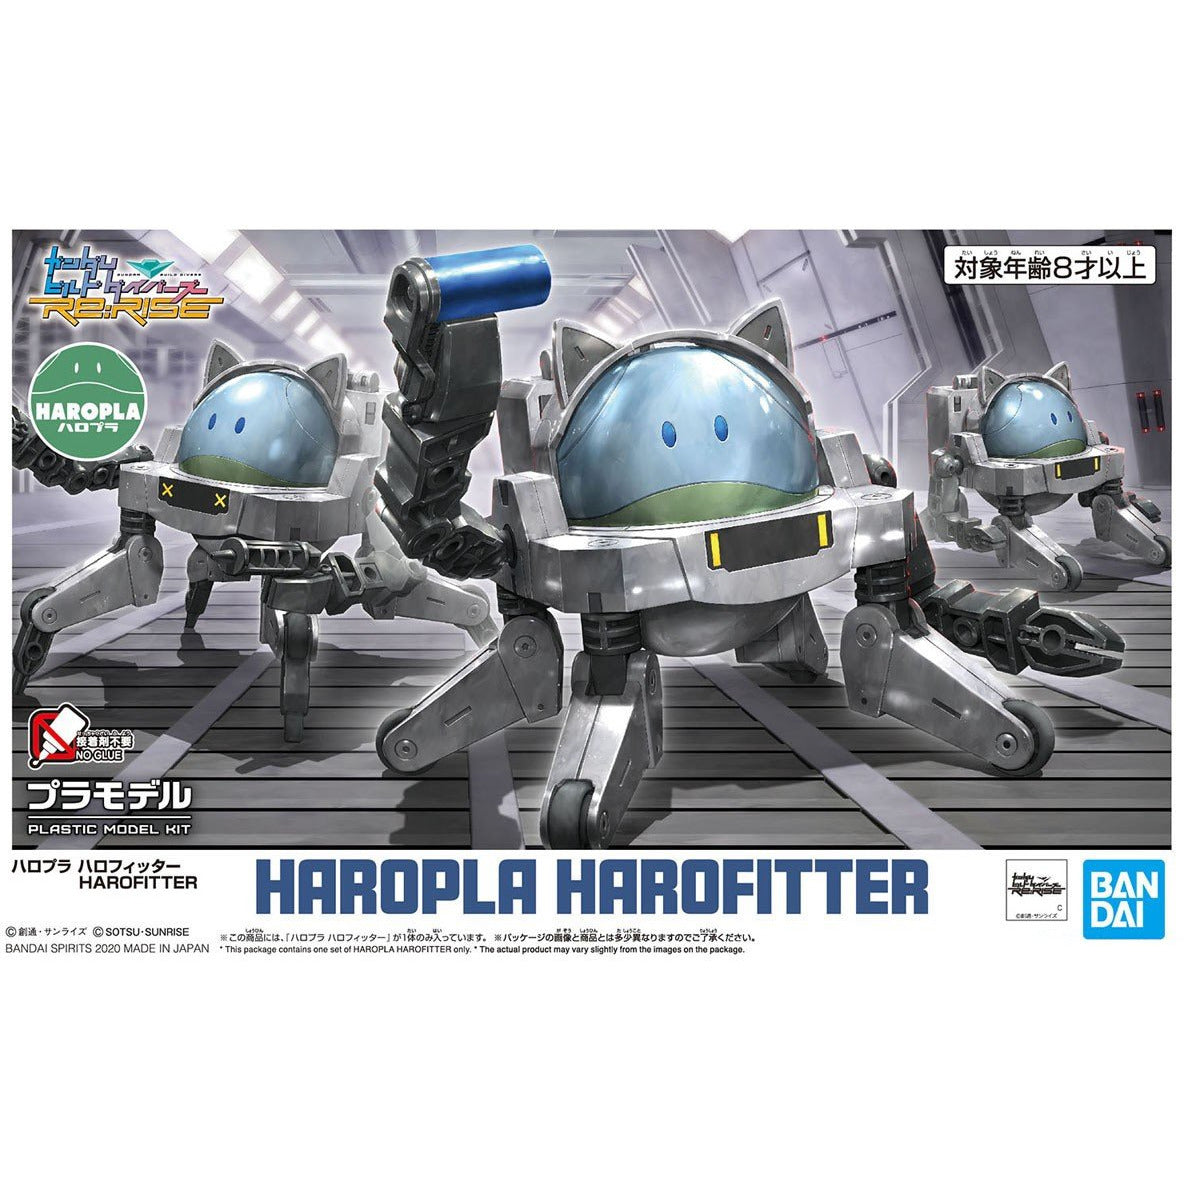 Haropla Harofitter #5060423 by Bandai